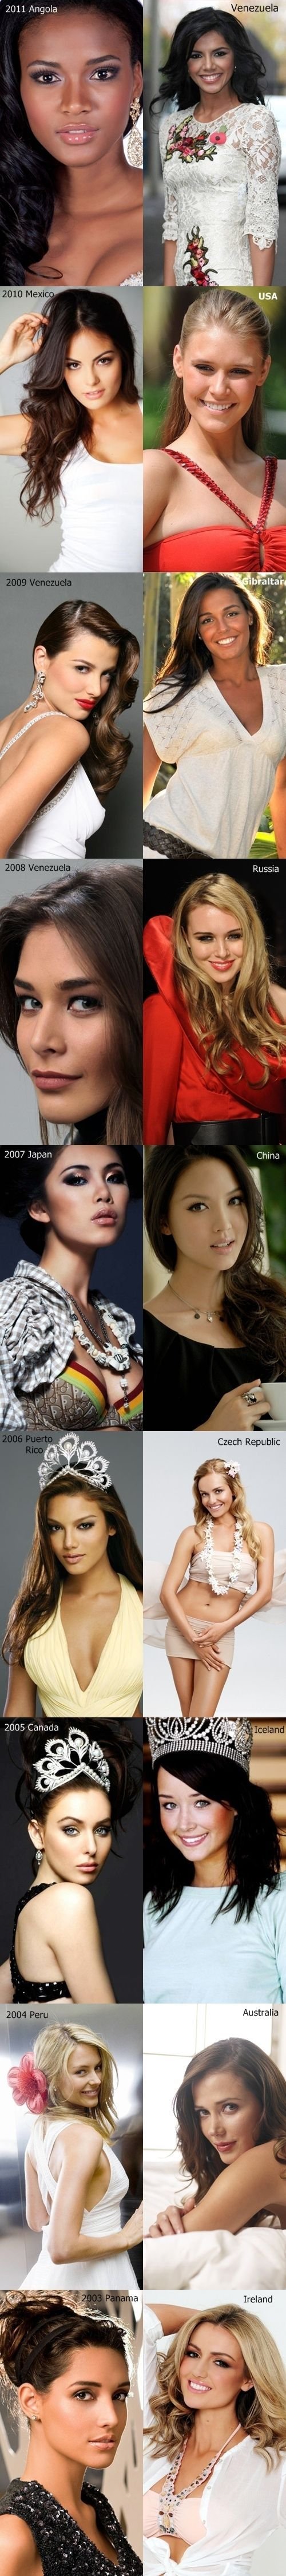 Победительницы Miss Universe и Miss World 2003-2012